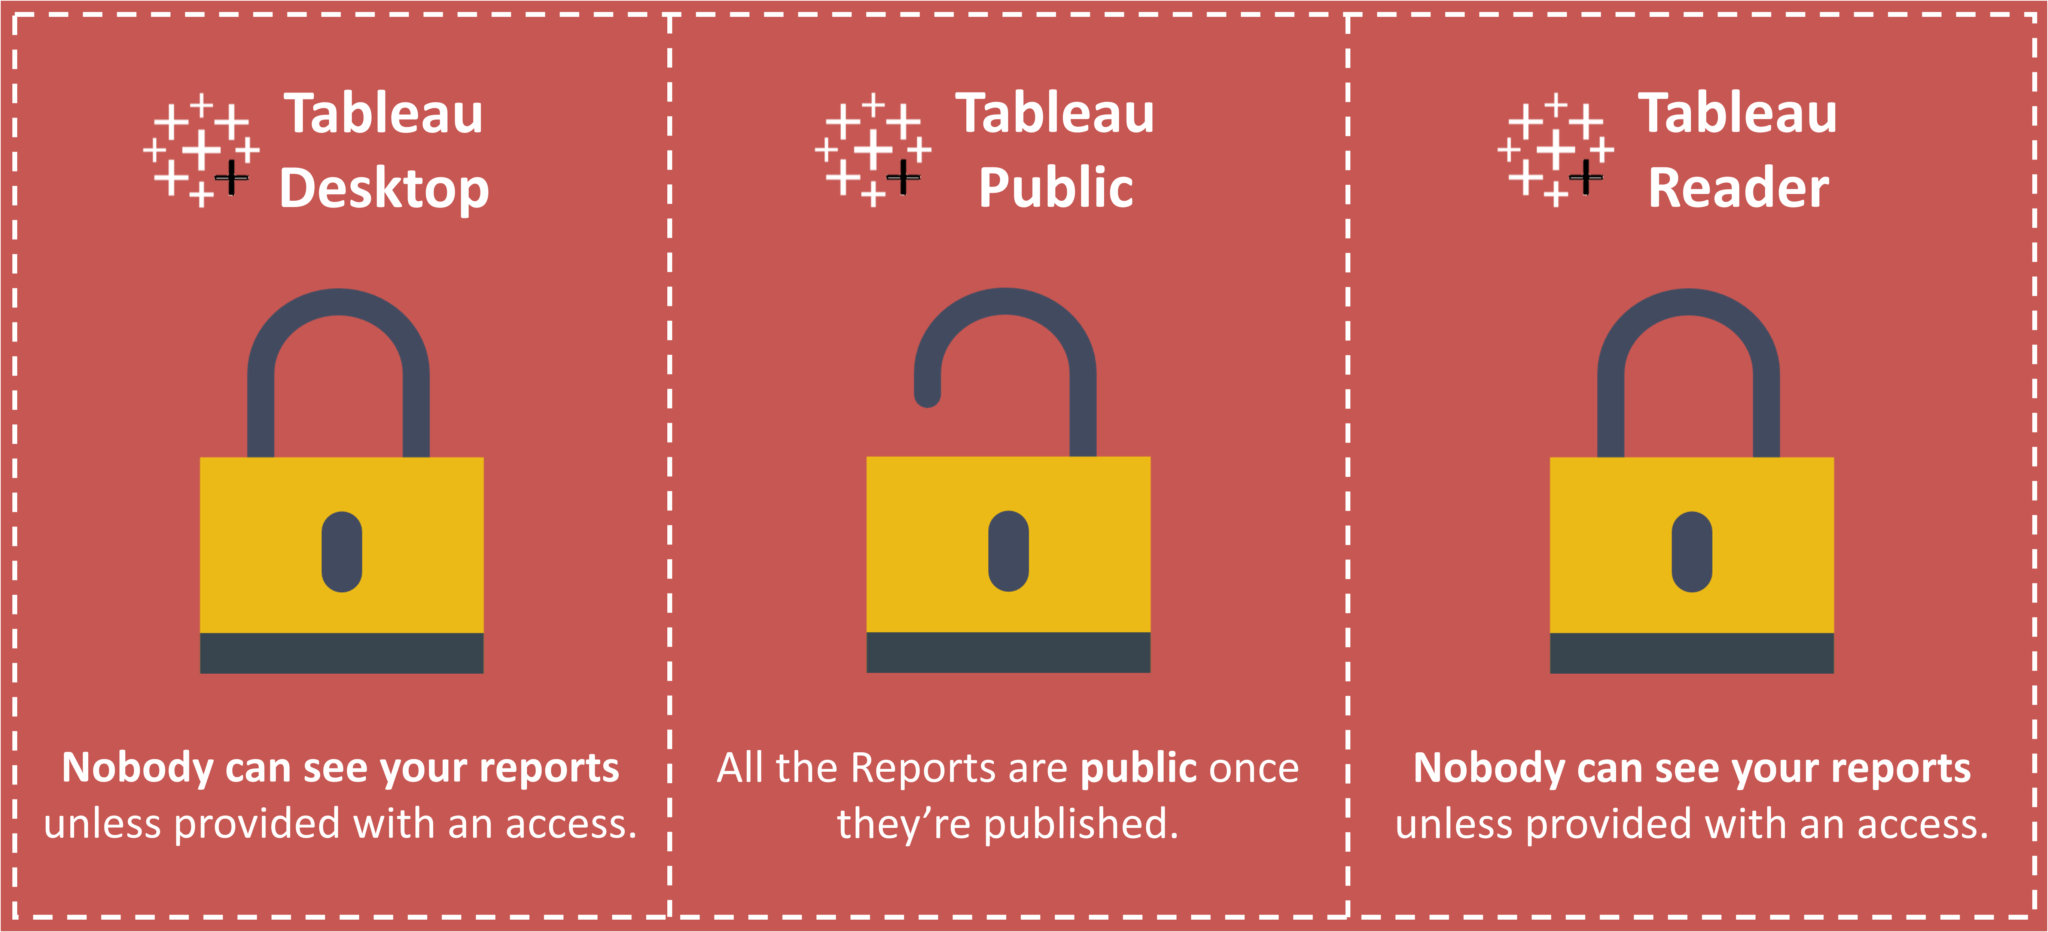 Security - Tableau Desktop vs Tableau Public vs Tableau Reader - Edureka